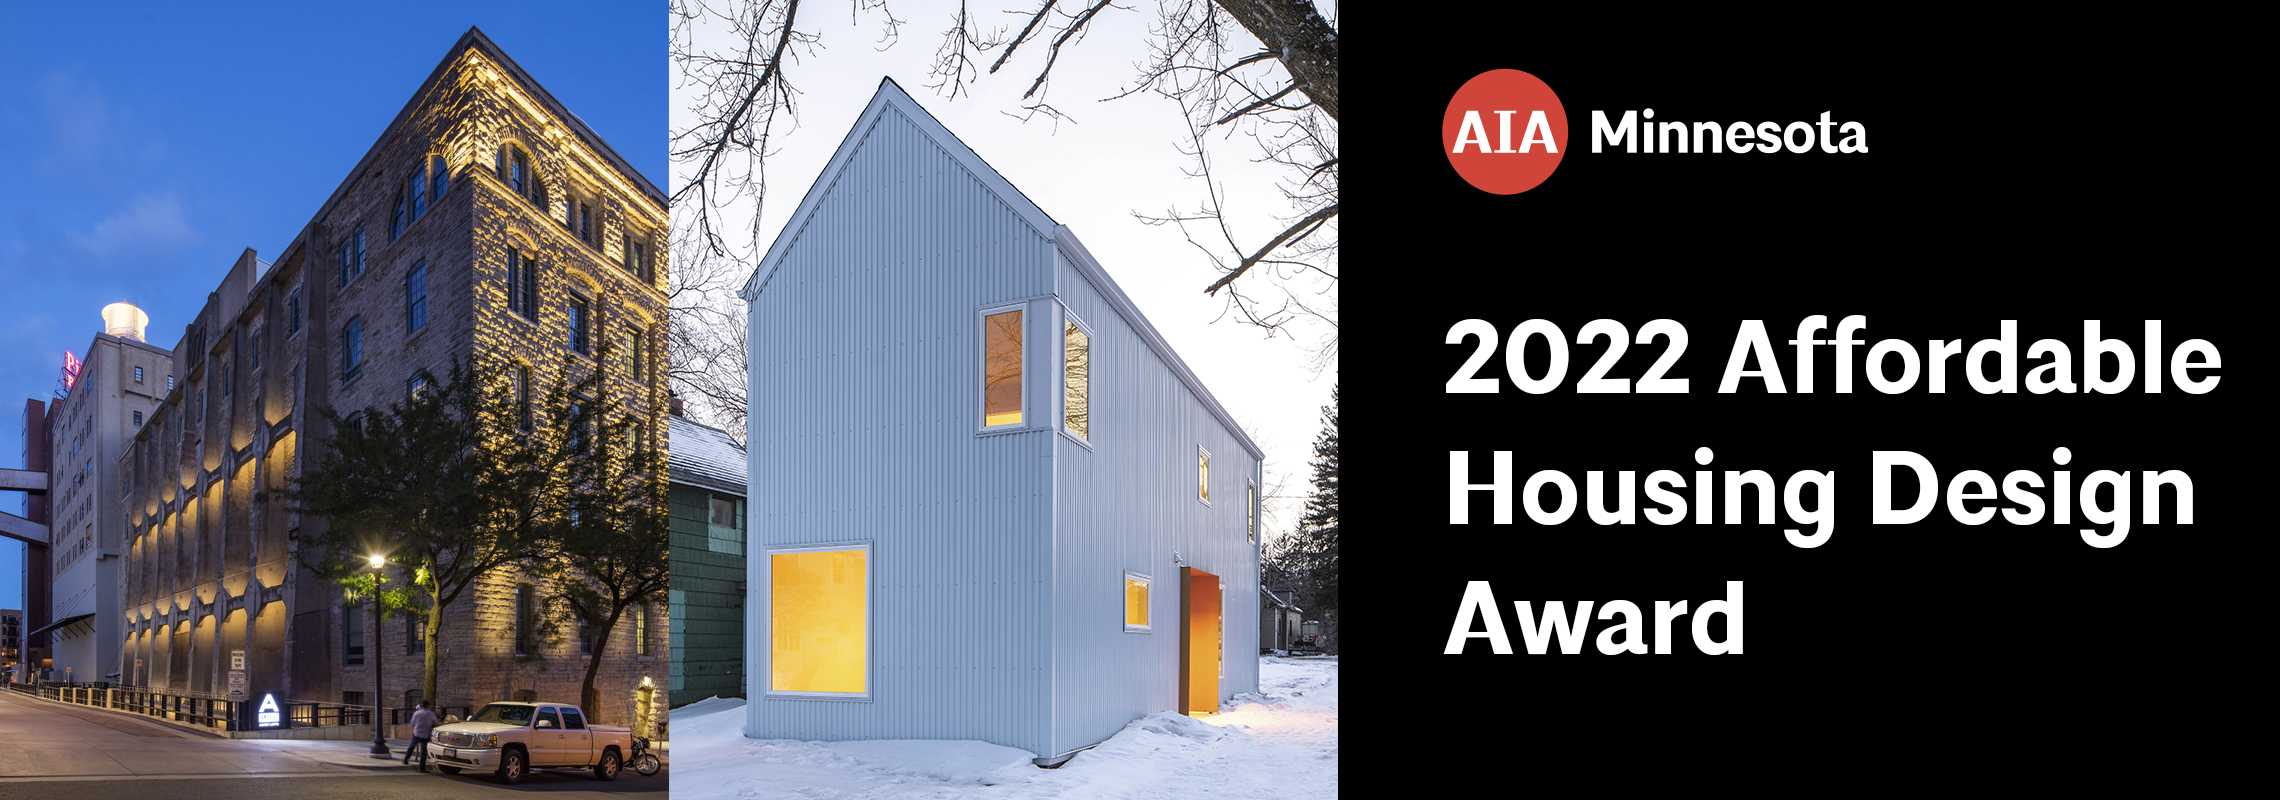 Affordable Housing Design Award